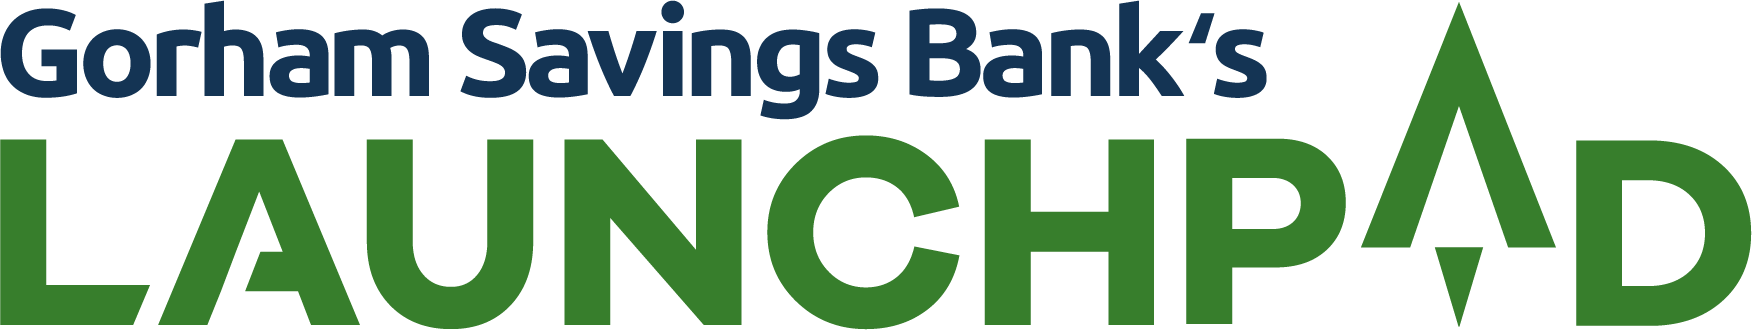 Gorham Savings Bank's LaunchPad